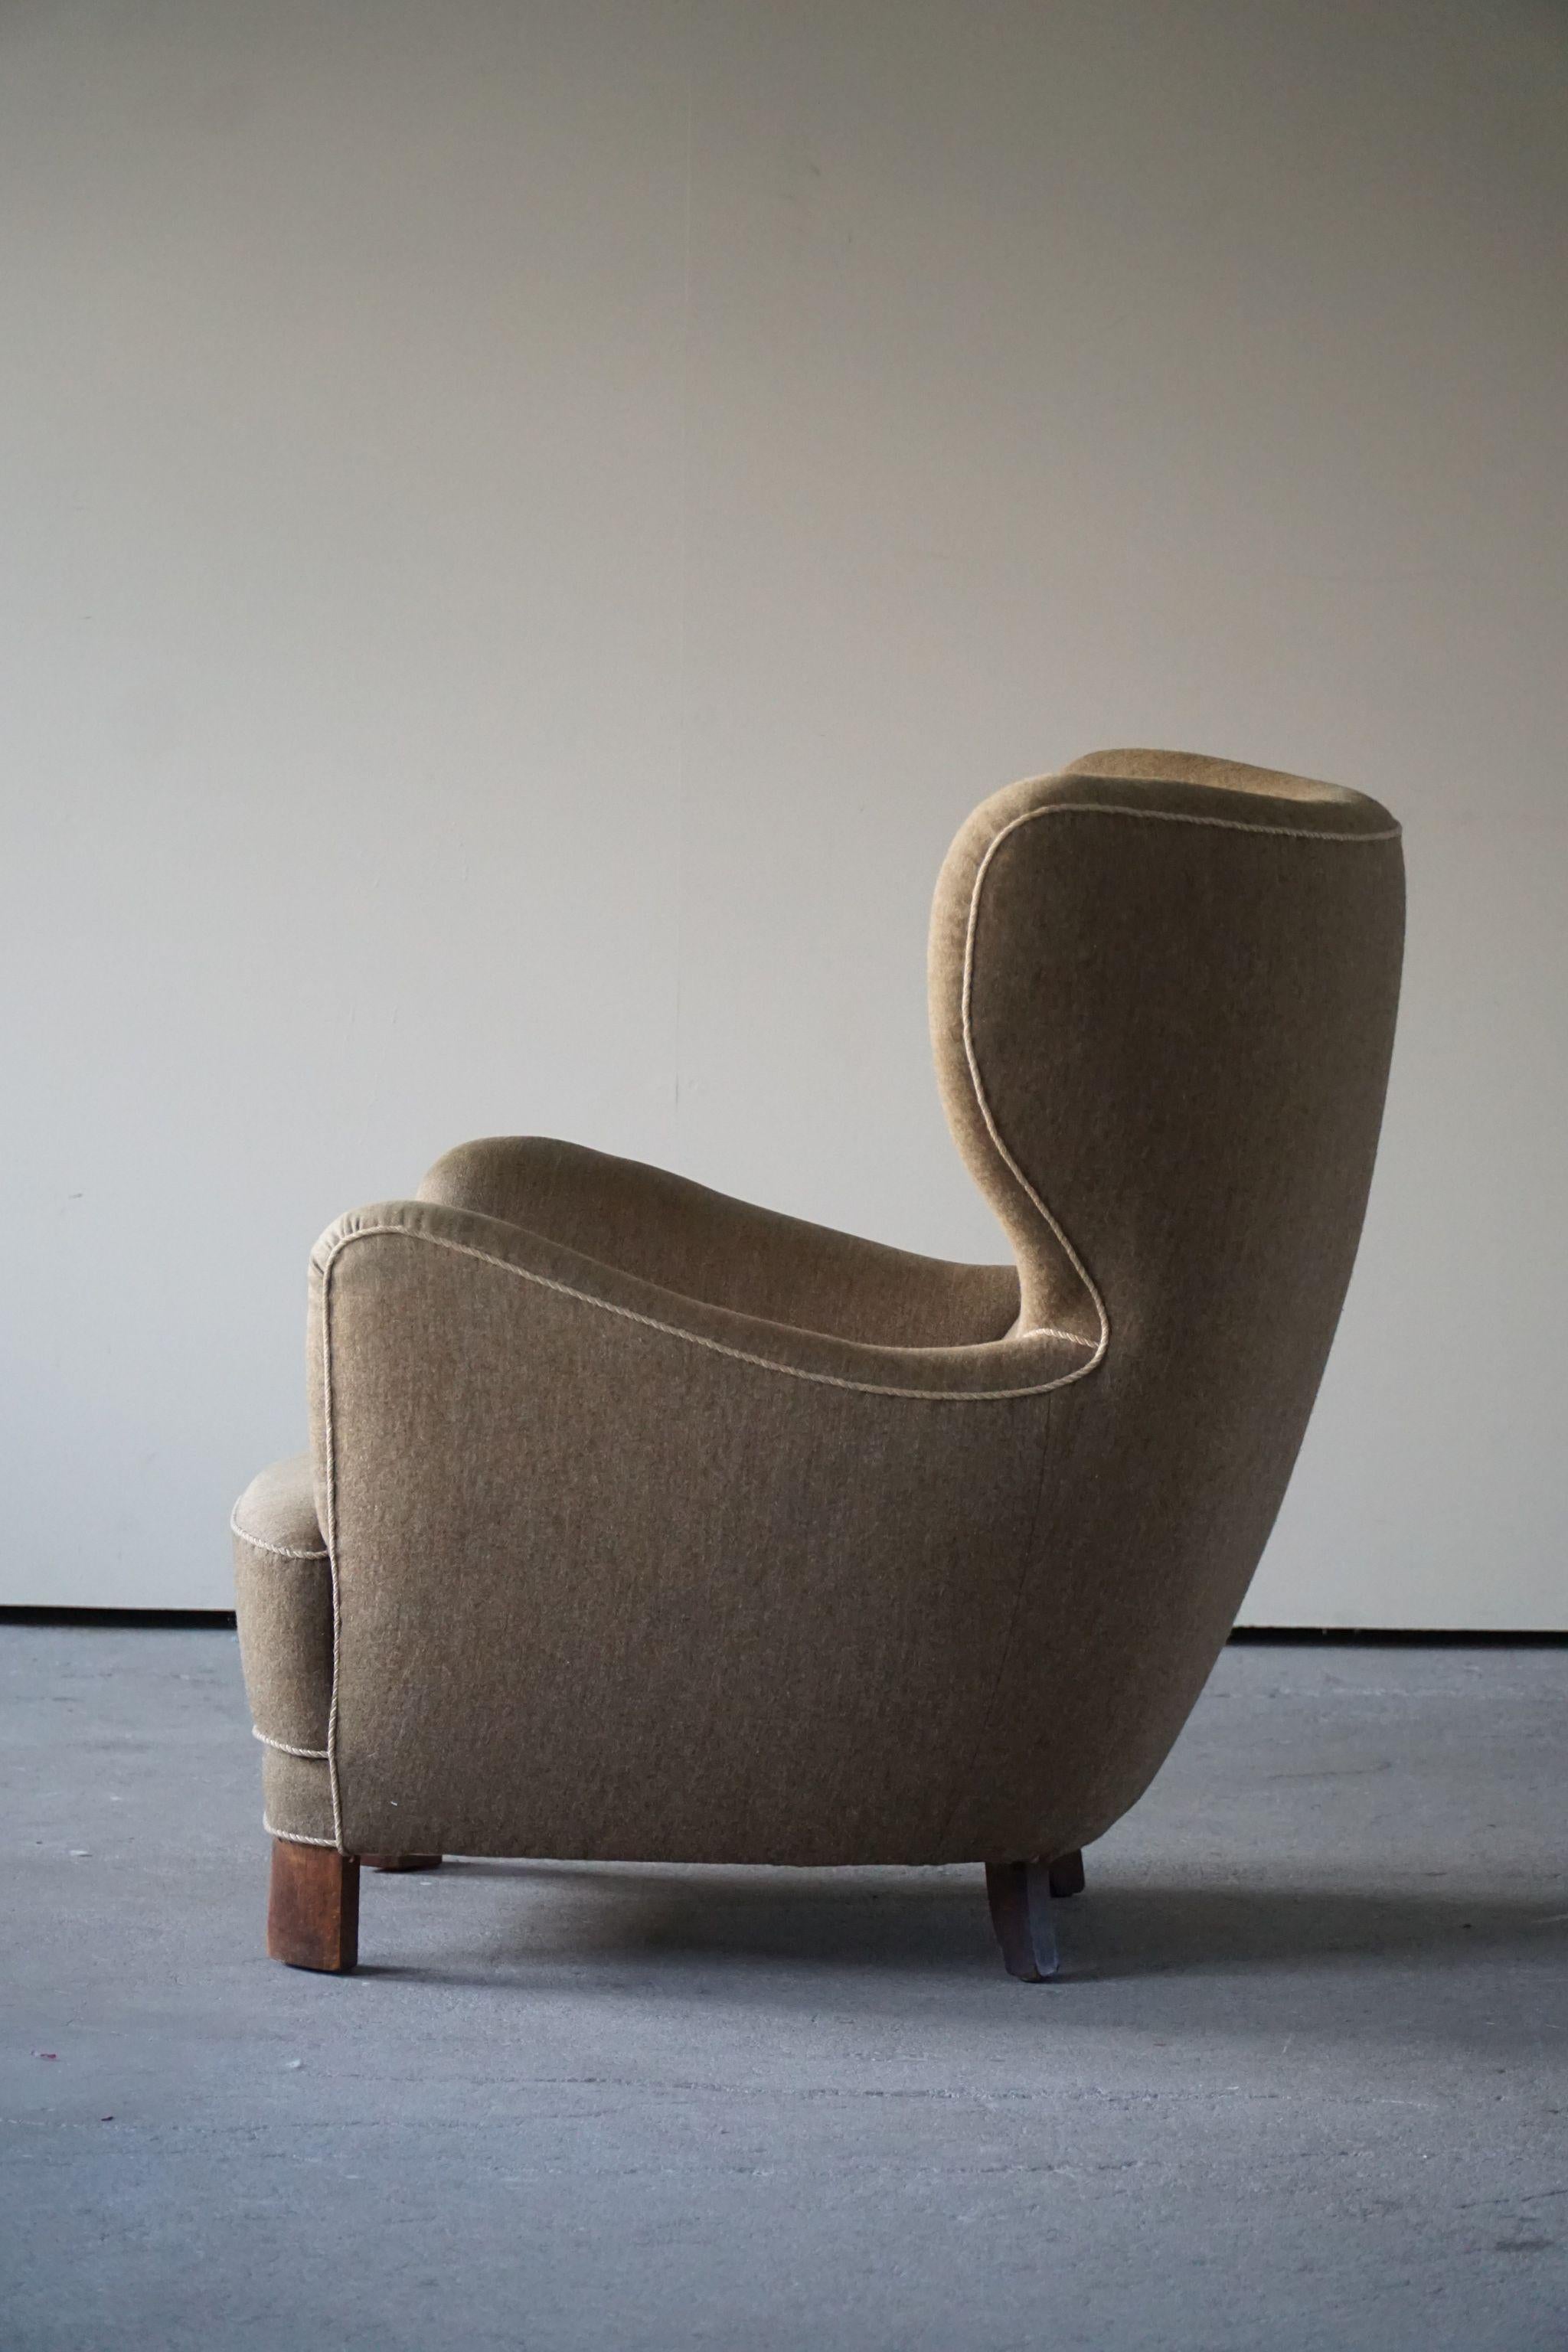 20th Century Mid-Century Modern Easy Chair, Flemming Lassen, Made in 1940s, Denmark